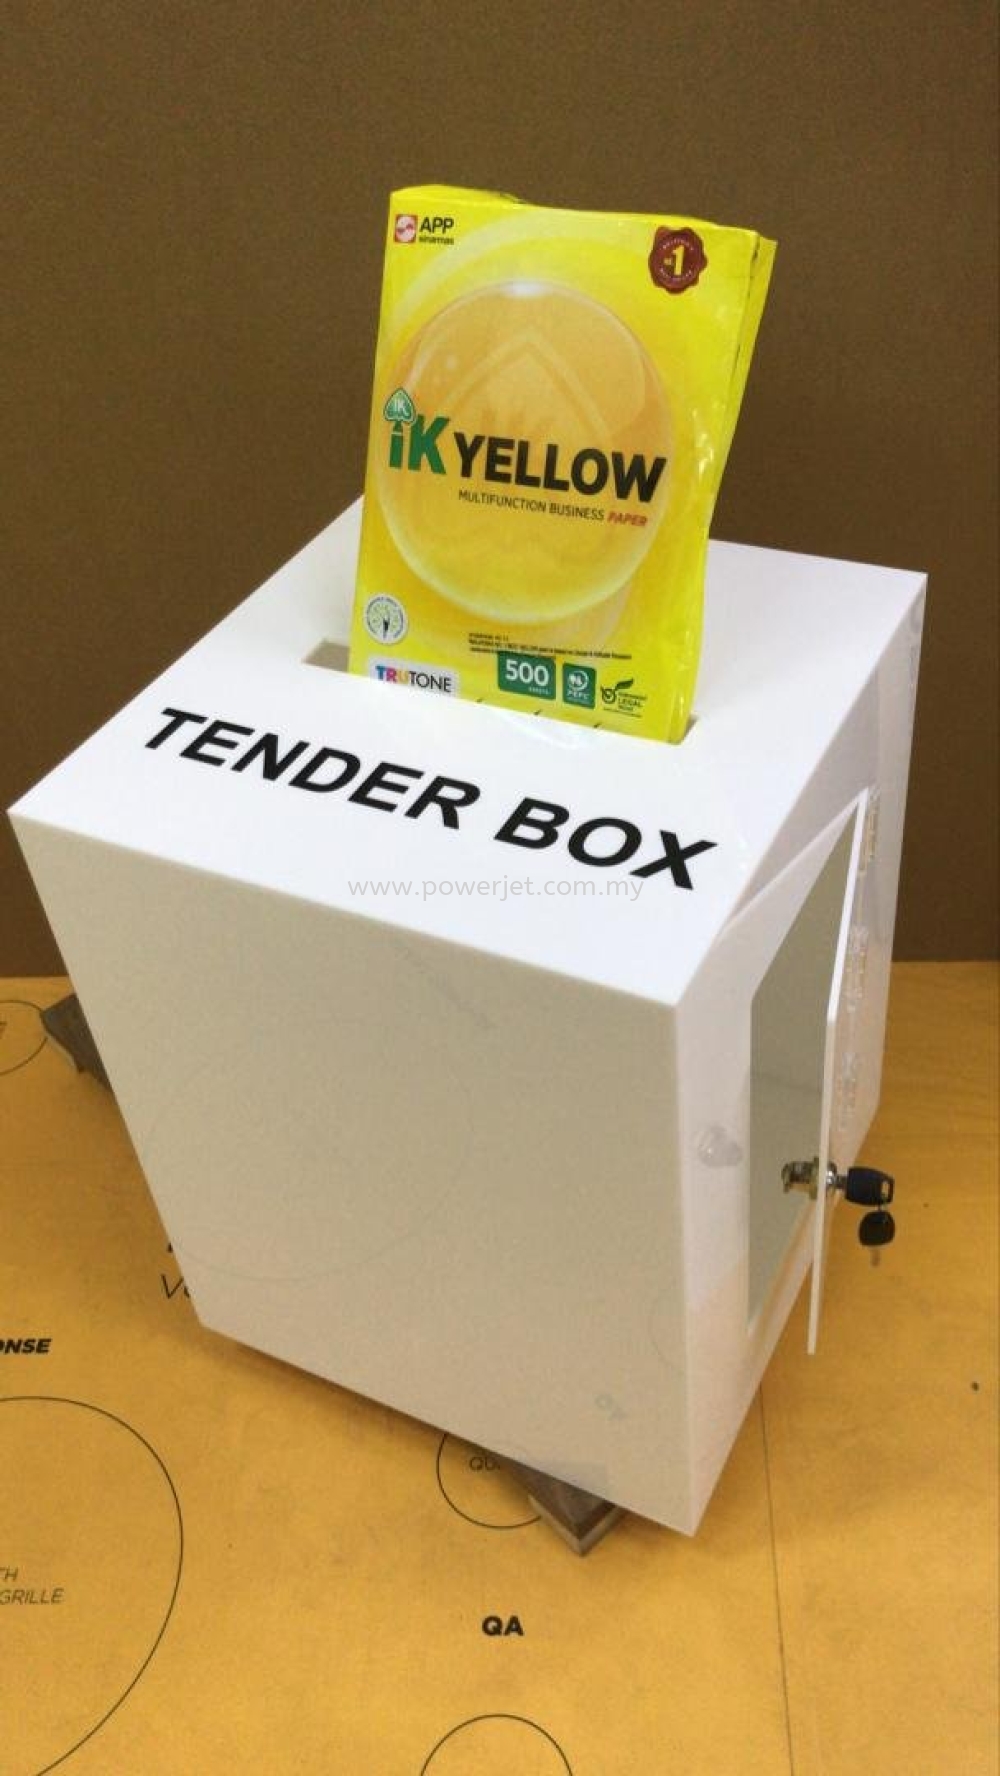 Acrylic Tender Box - Project Tender 